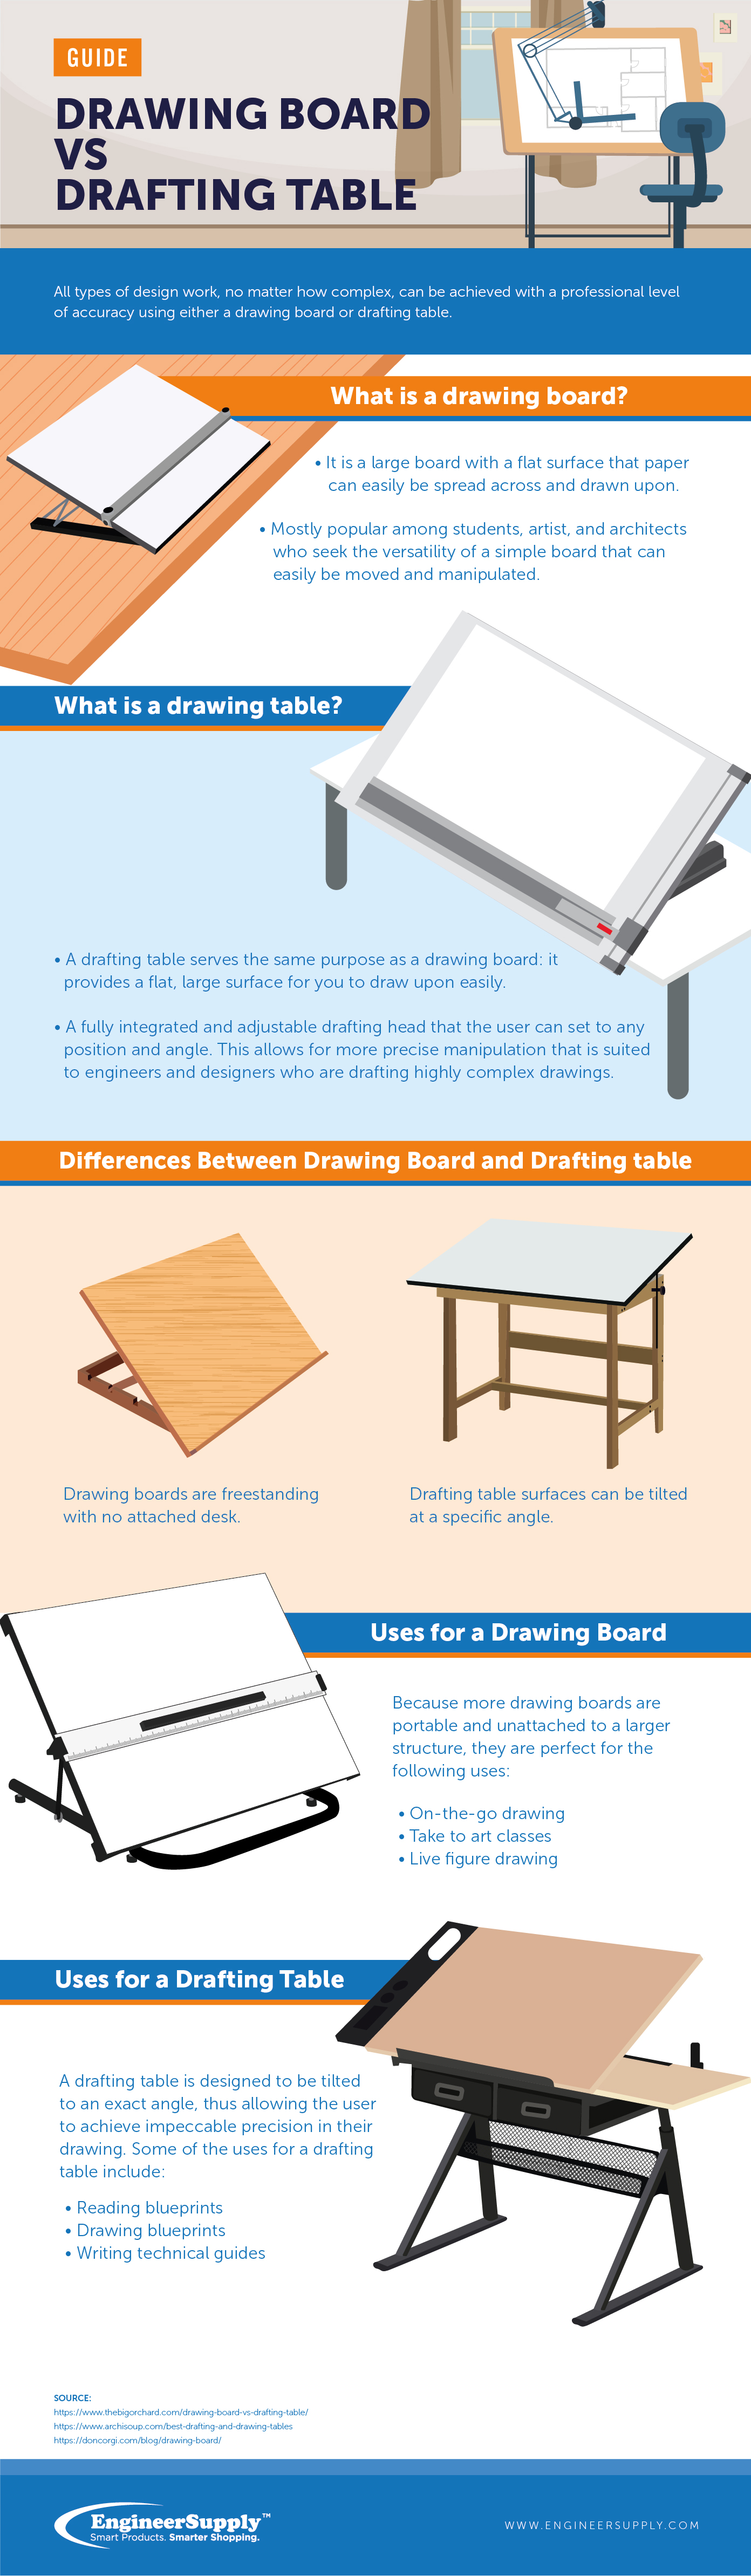 Drawing Boards vs Drafting Tables